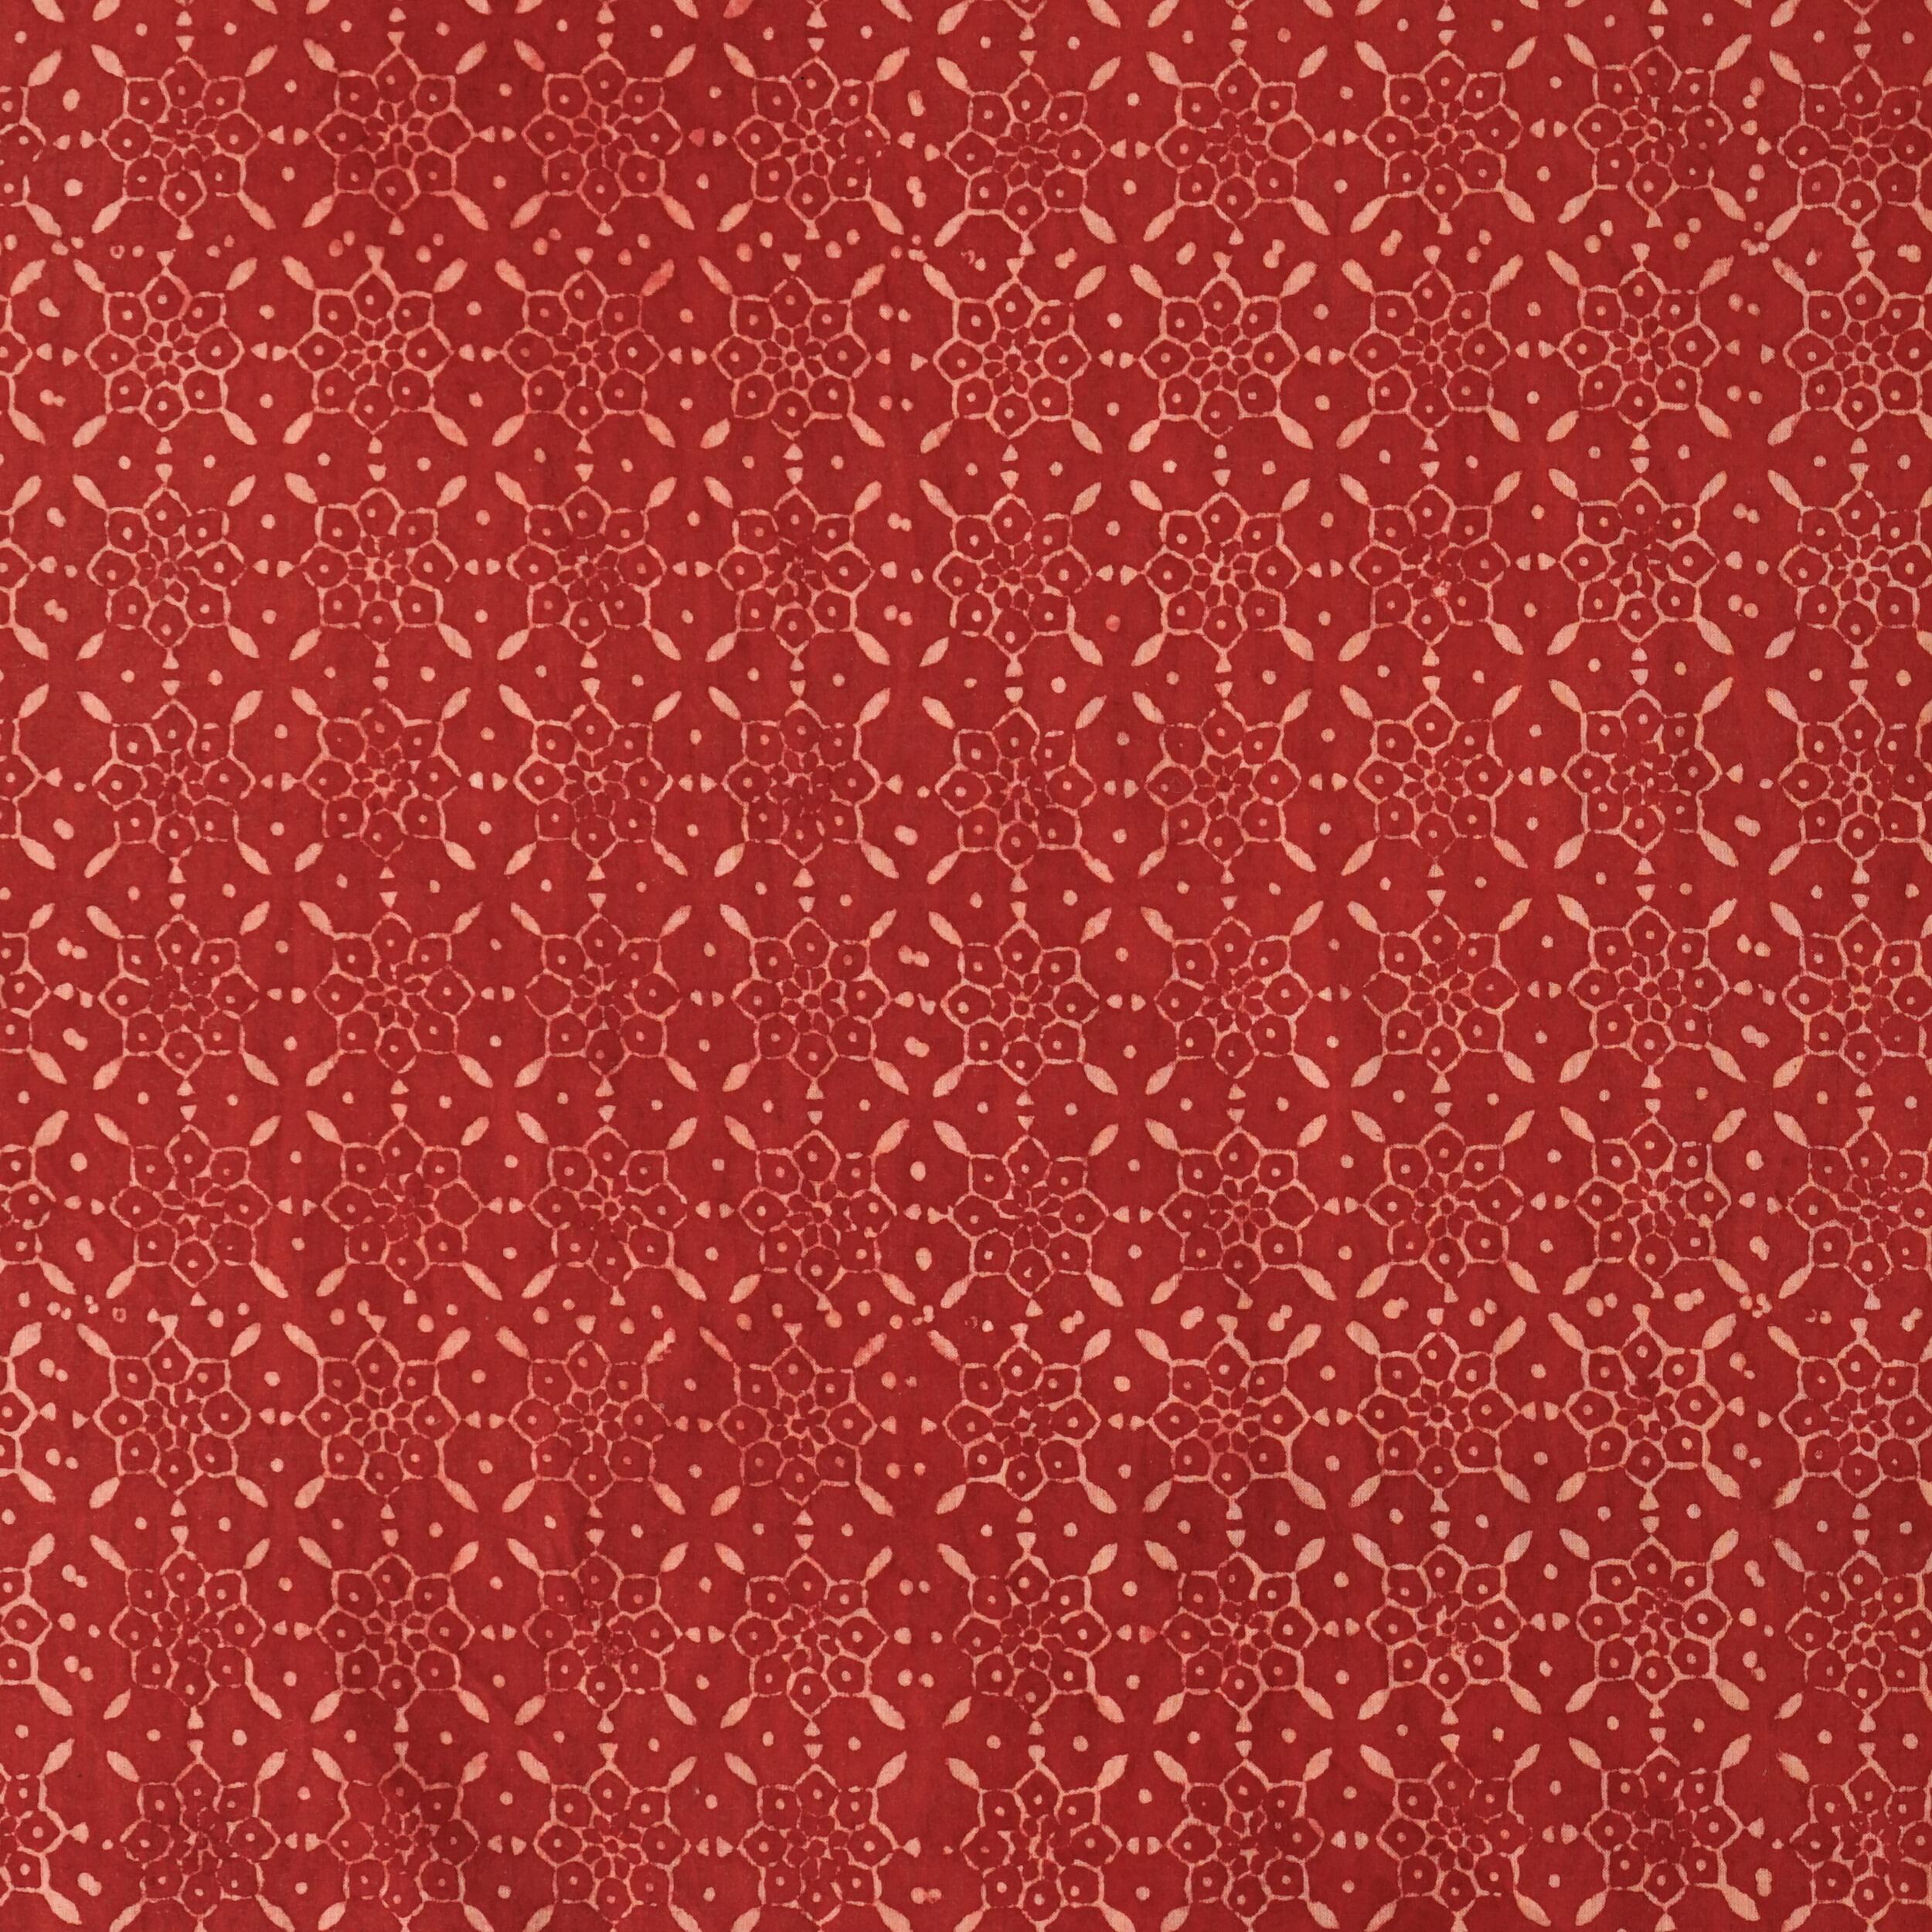 2 - AHM53 - Block-Printed Cotton Fabric - Alizarin Dye - Red - Pangs Motif - Flat